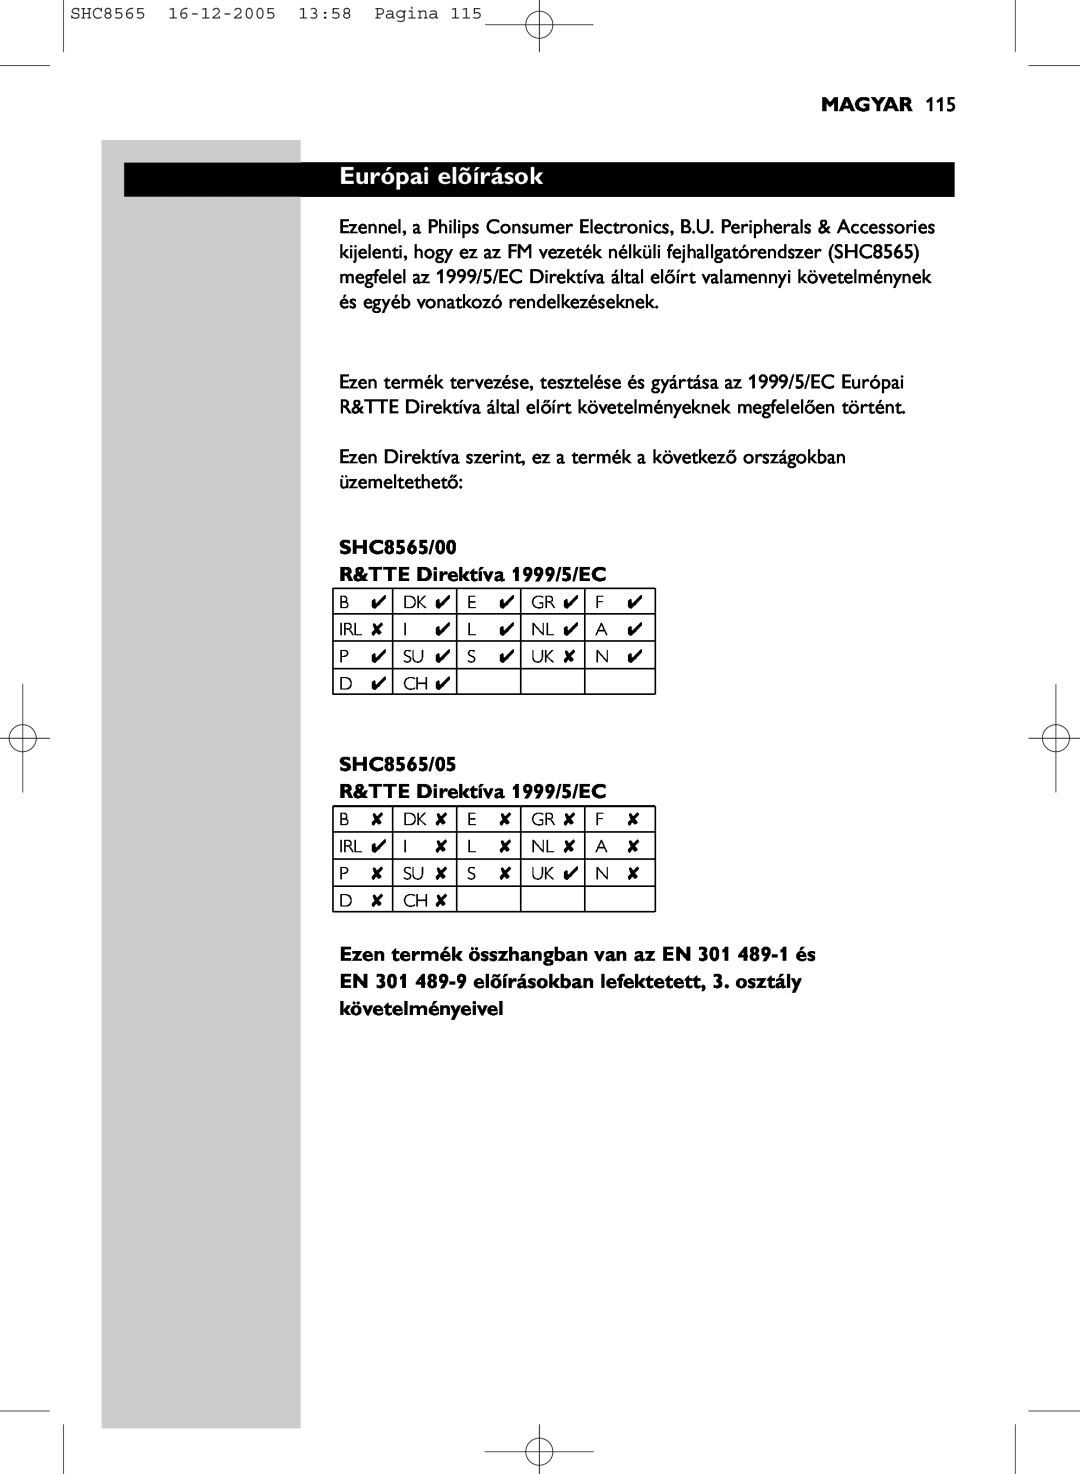 Philips manual Európai elõírások, Magyar, SHC8565/00 R&TTE Direktíva 1999/5/EC, SHC8565/05 R&TTE Direktíva 1999/5/EC 